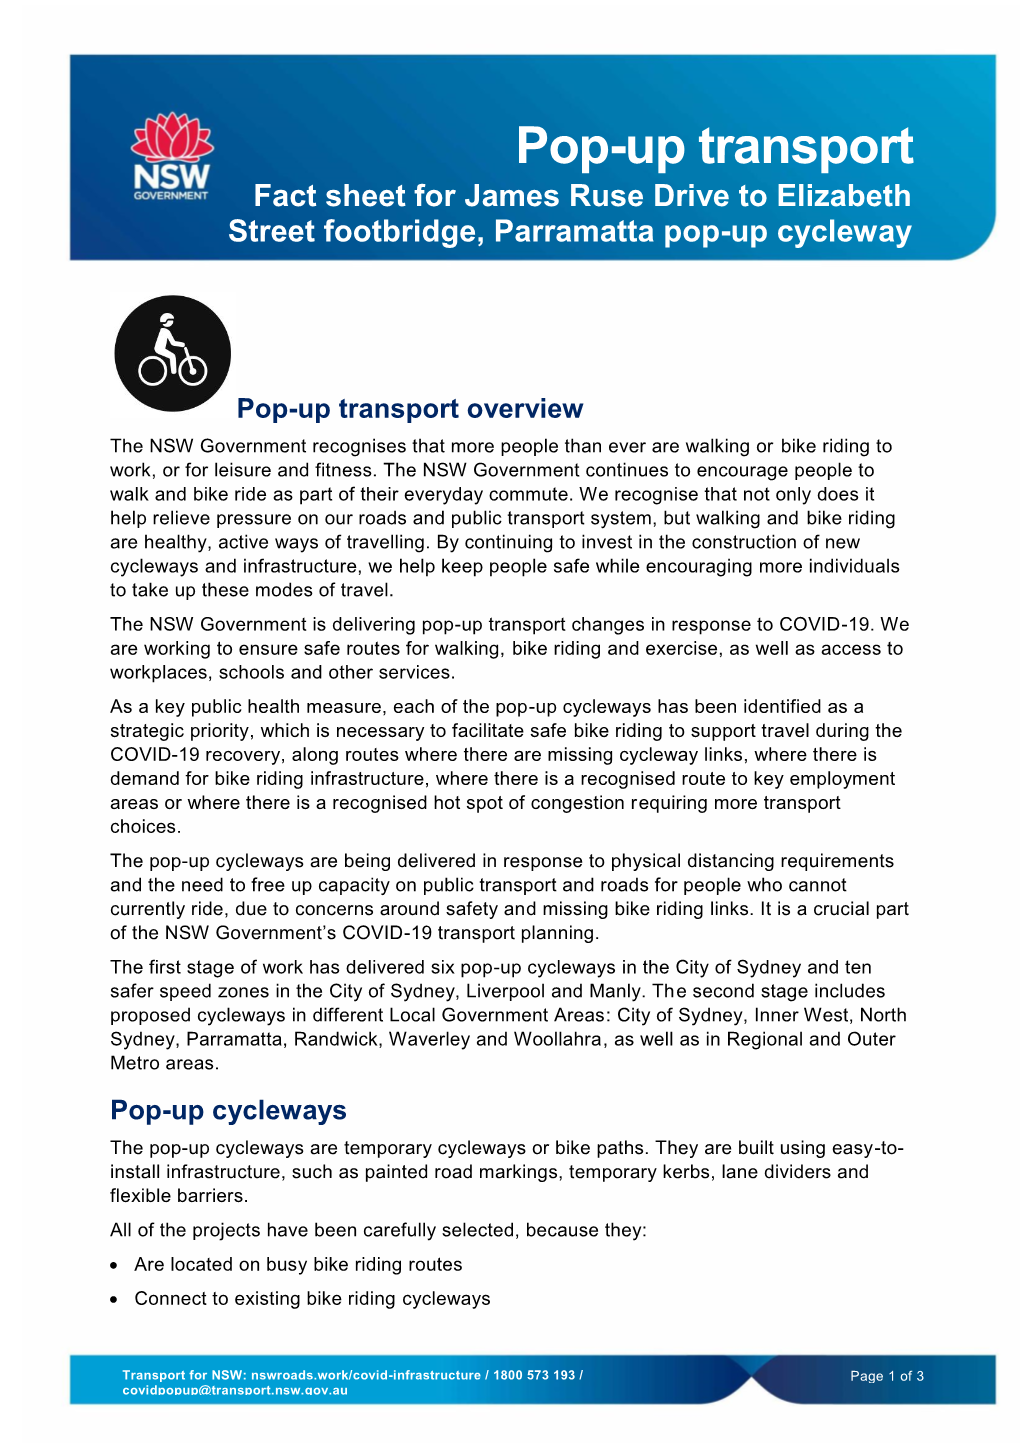 Pop-Up Transport Fact Sheet for James Ruse Drive to Elizabeth Street Footbridge, Parramatta Pop-Up Cycleway